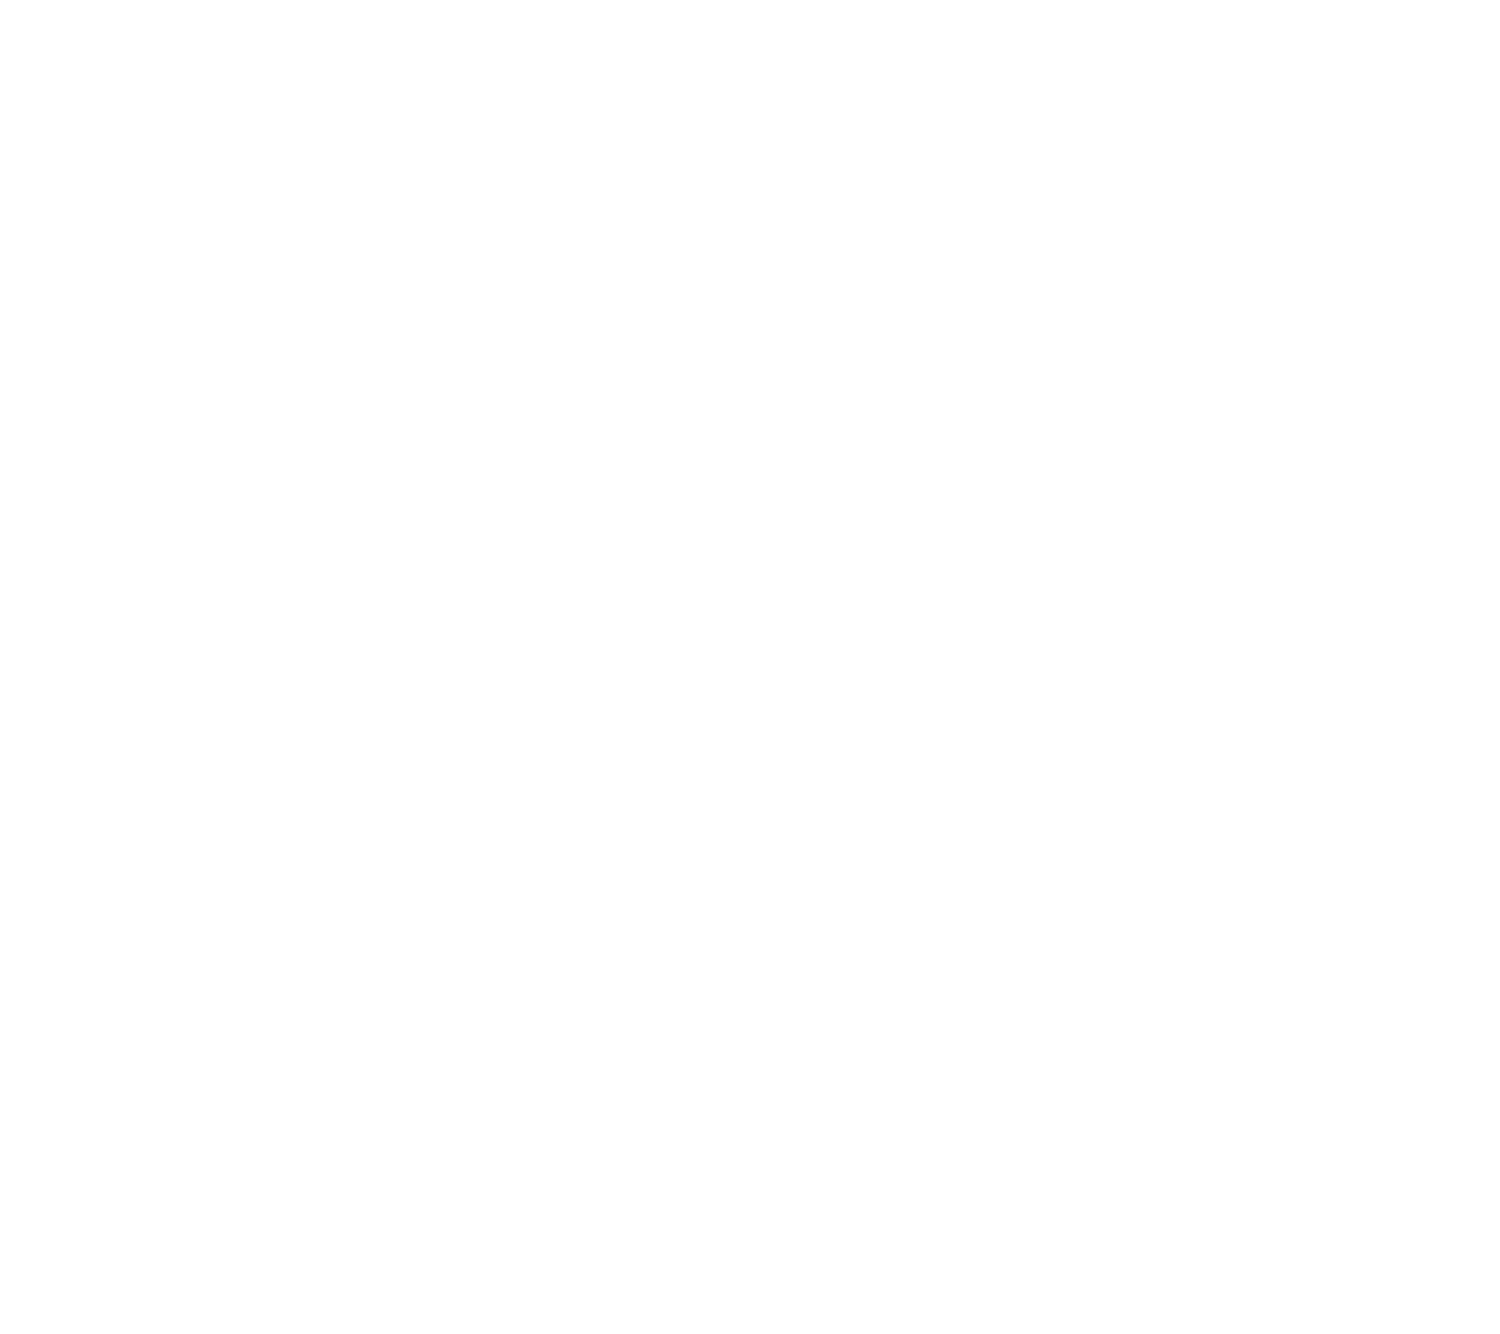 Wood Street Studios